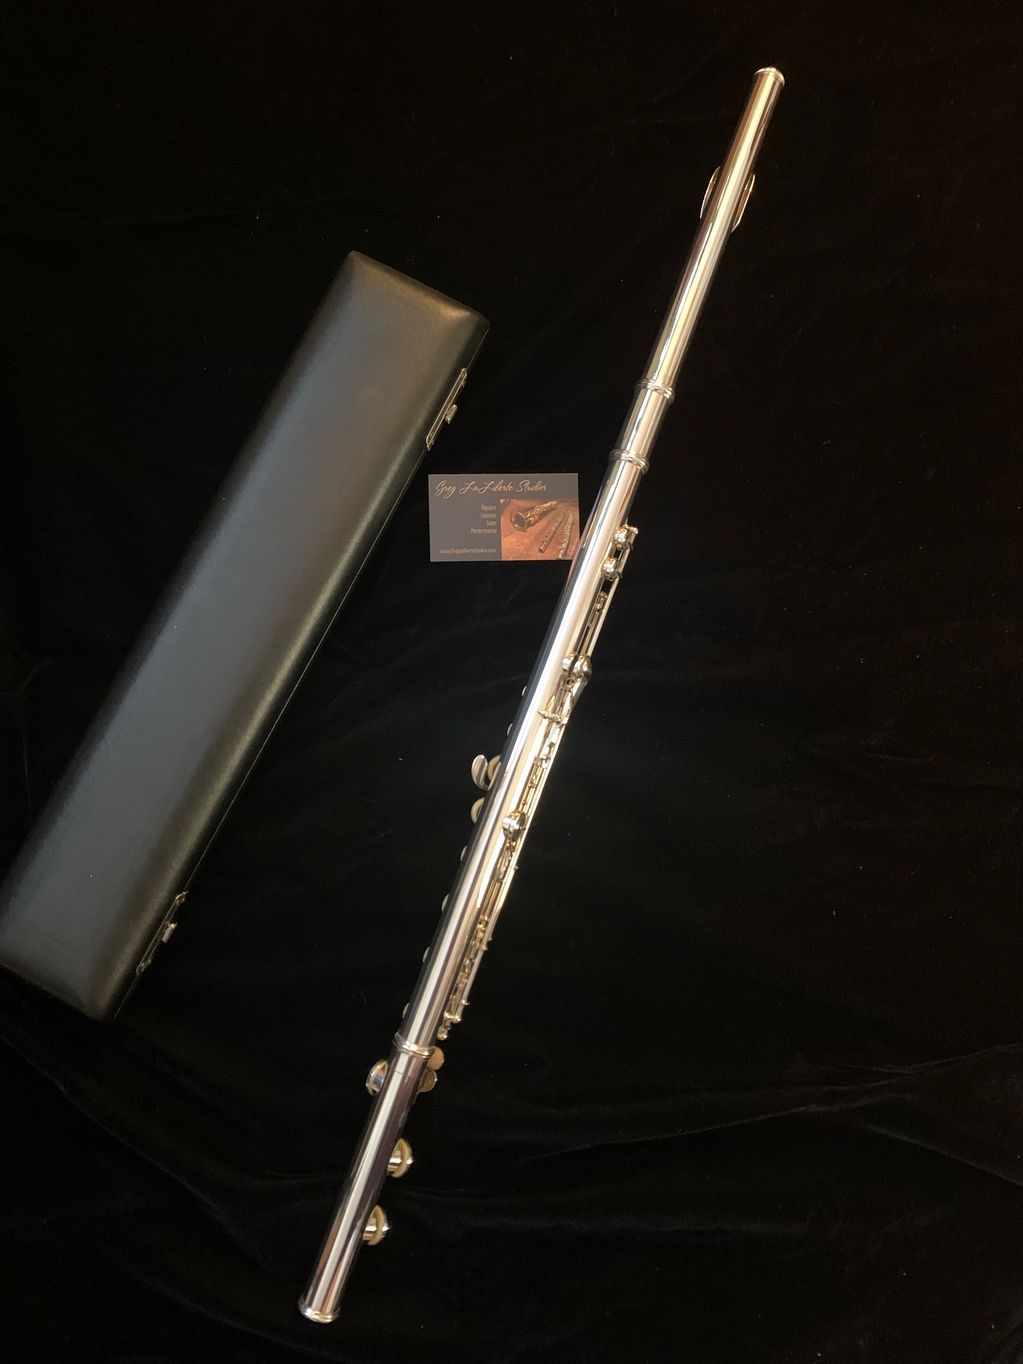 ALTUS flute maker, flute d'Amore in Bb, founder Shuichi Tanaka, custom handmade flute, Japan